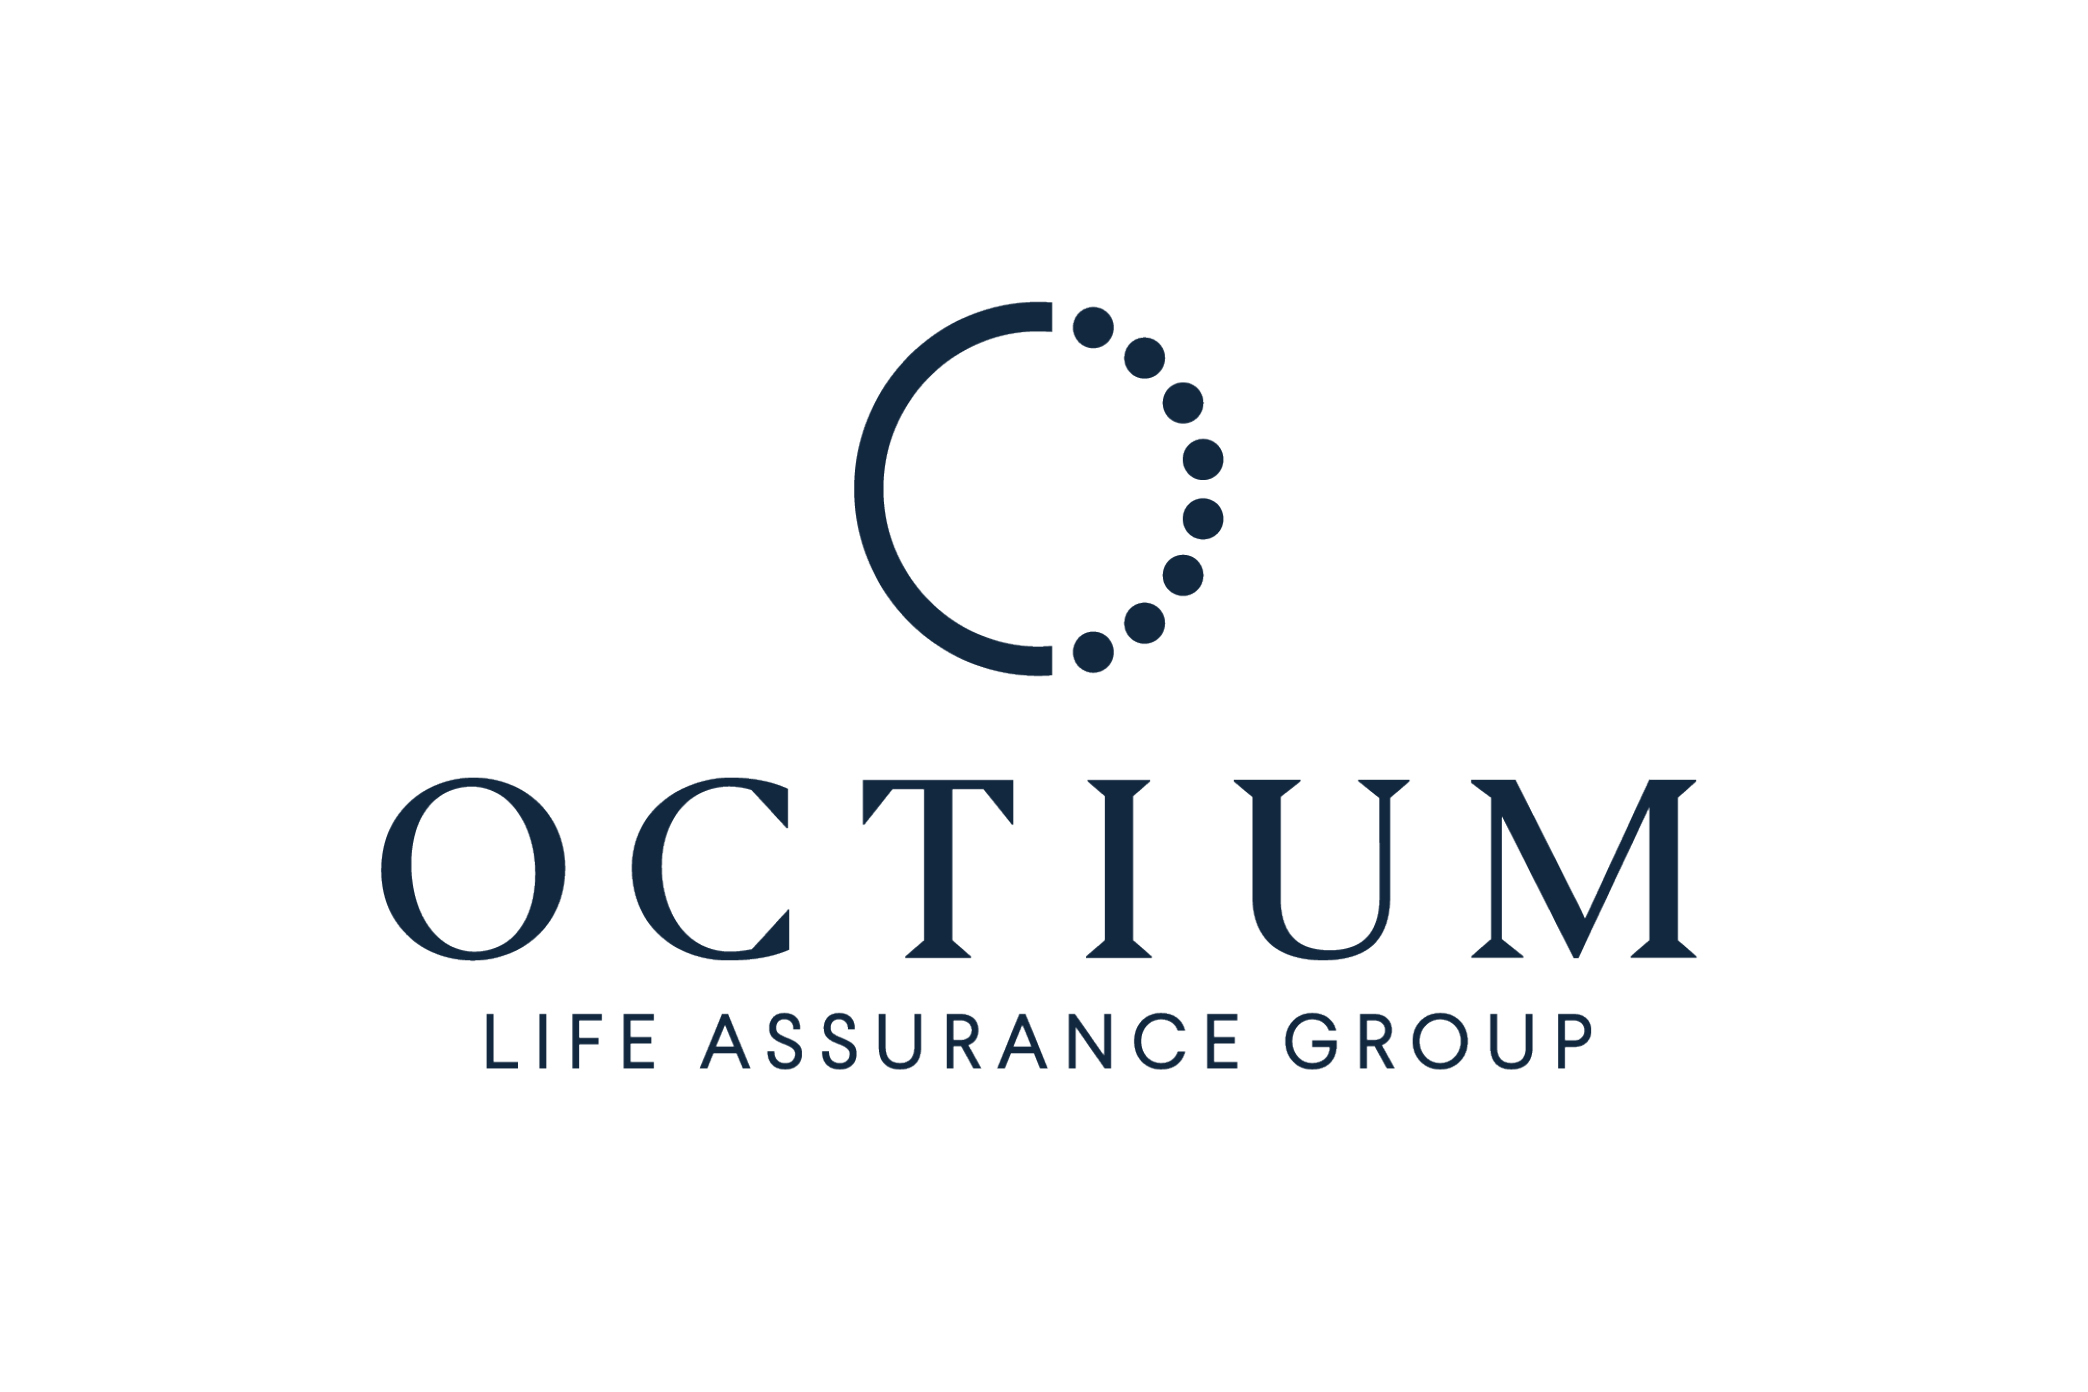 Octium Life Assurance Group